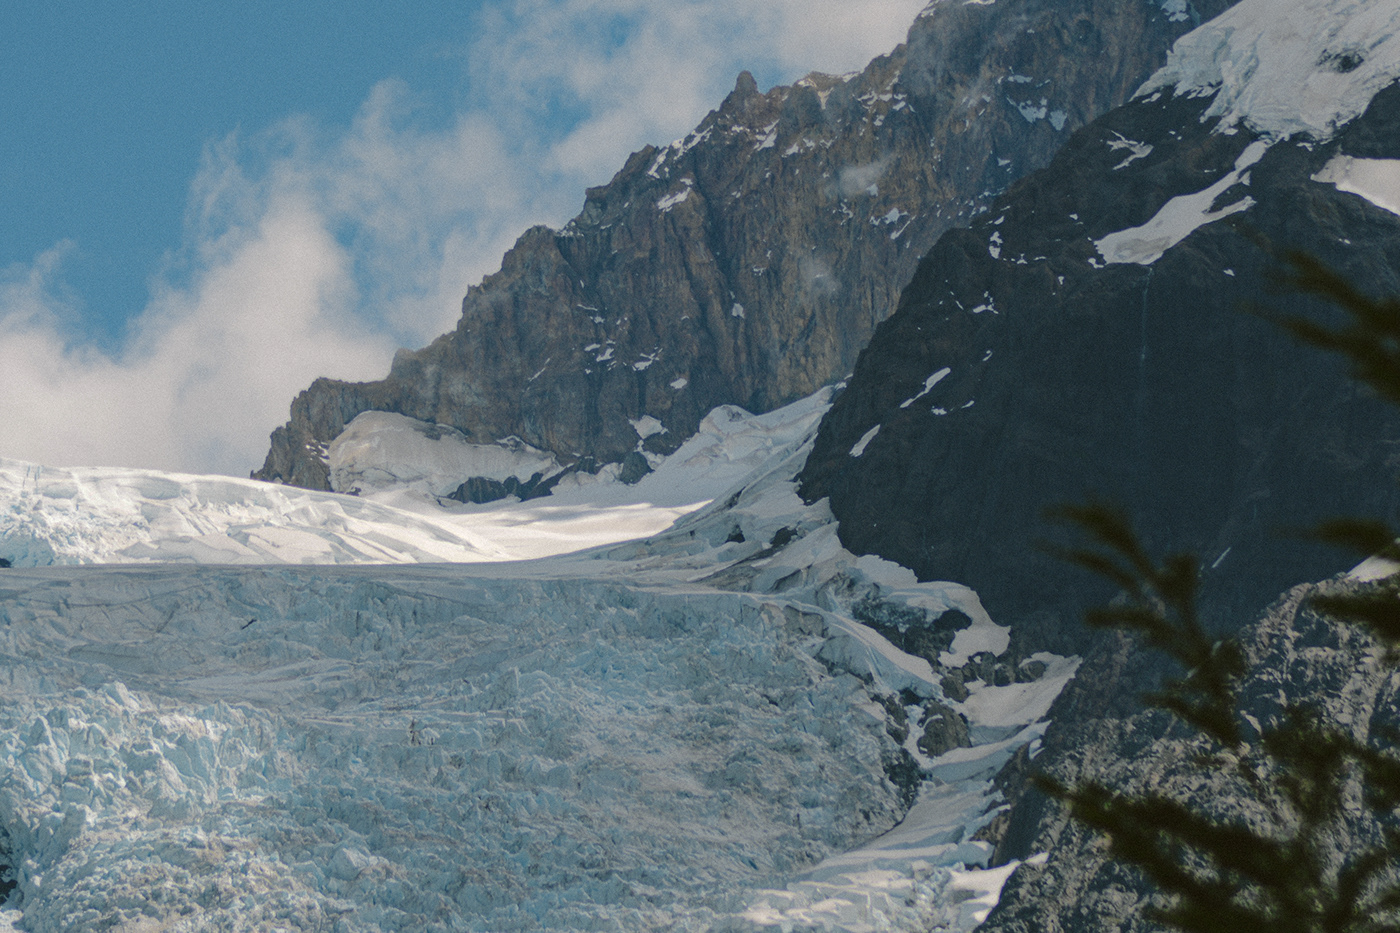 Outdoor patagonia surdechile Nature Landscape mountains Coyhaique futaleufu glaciar southofchile